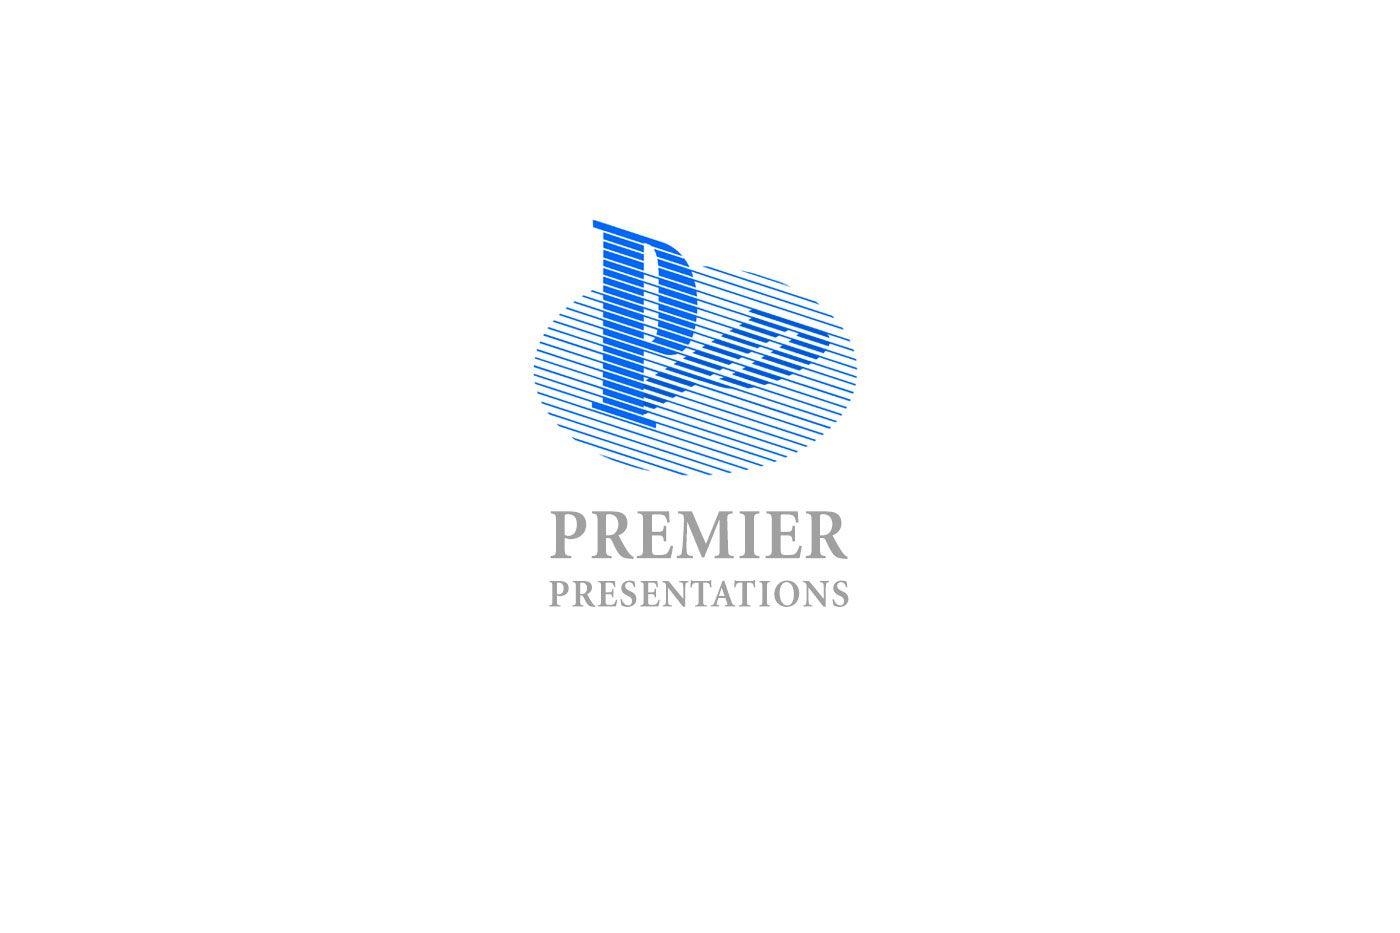 Google Presentation Logo - Premier Presentations logo | Nicholas Communications